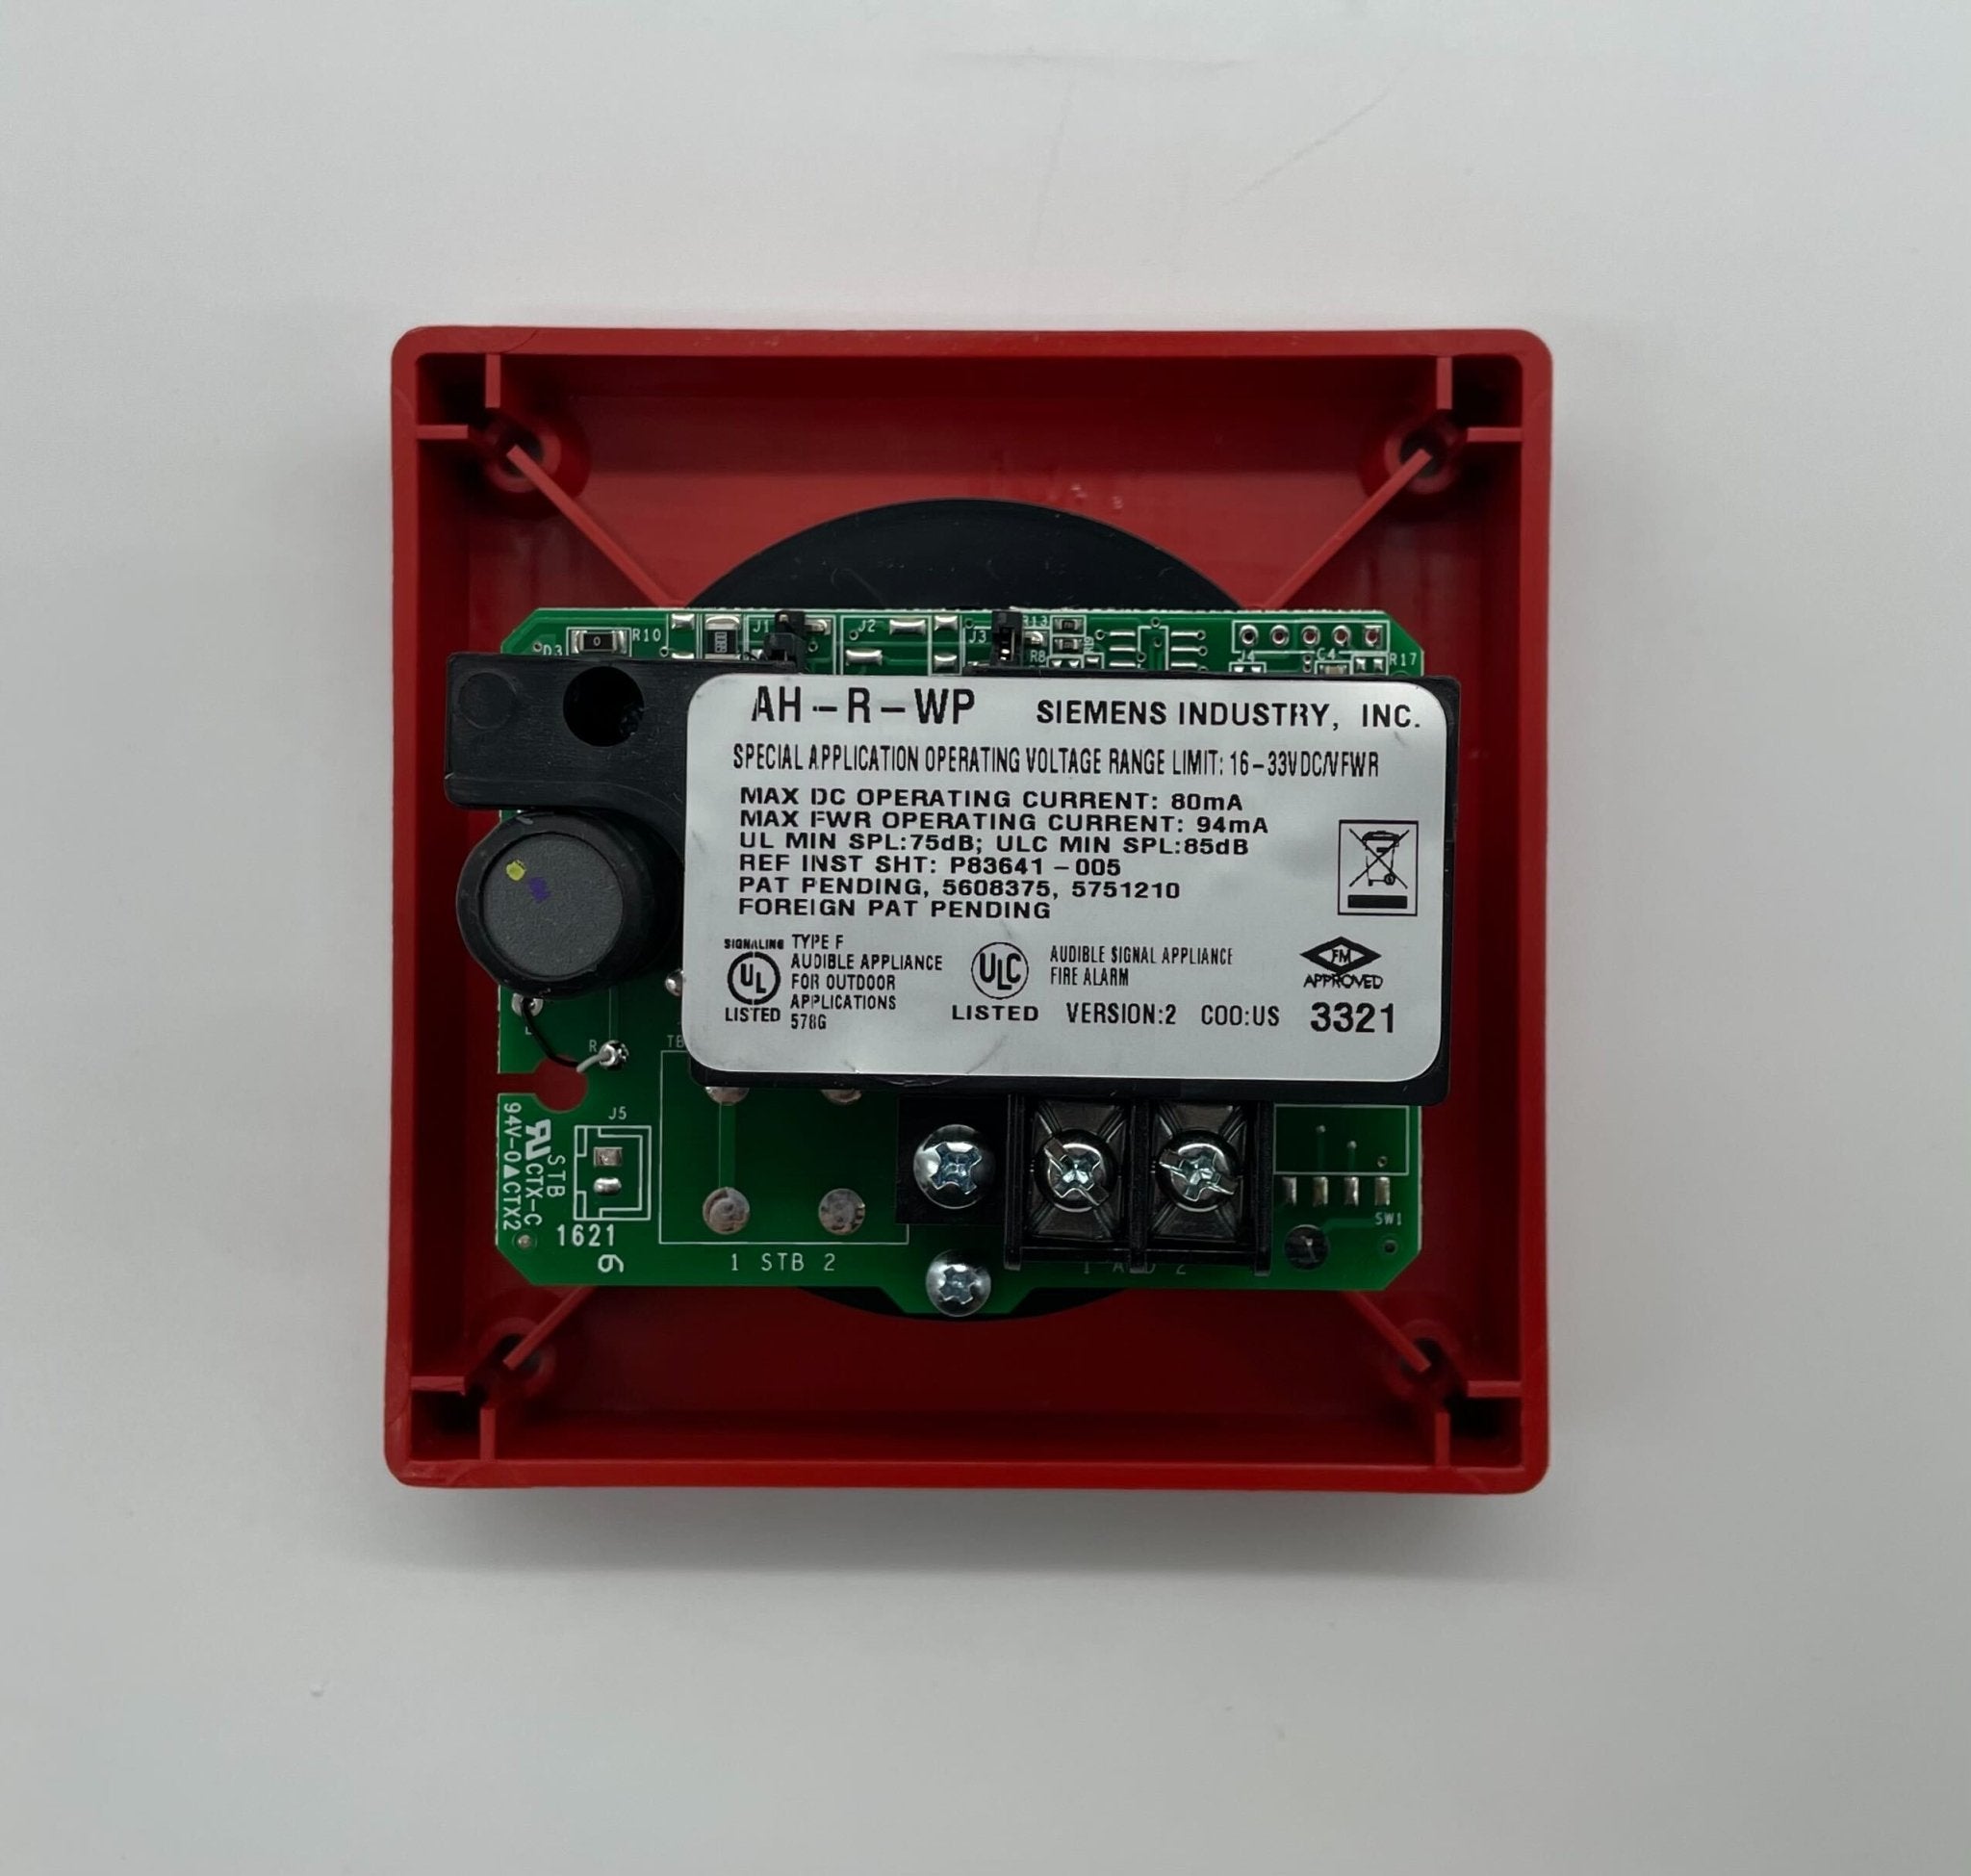 Siemens AH-R-WP - The Fire Alarm Supplier